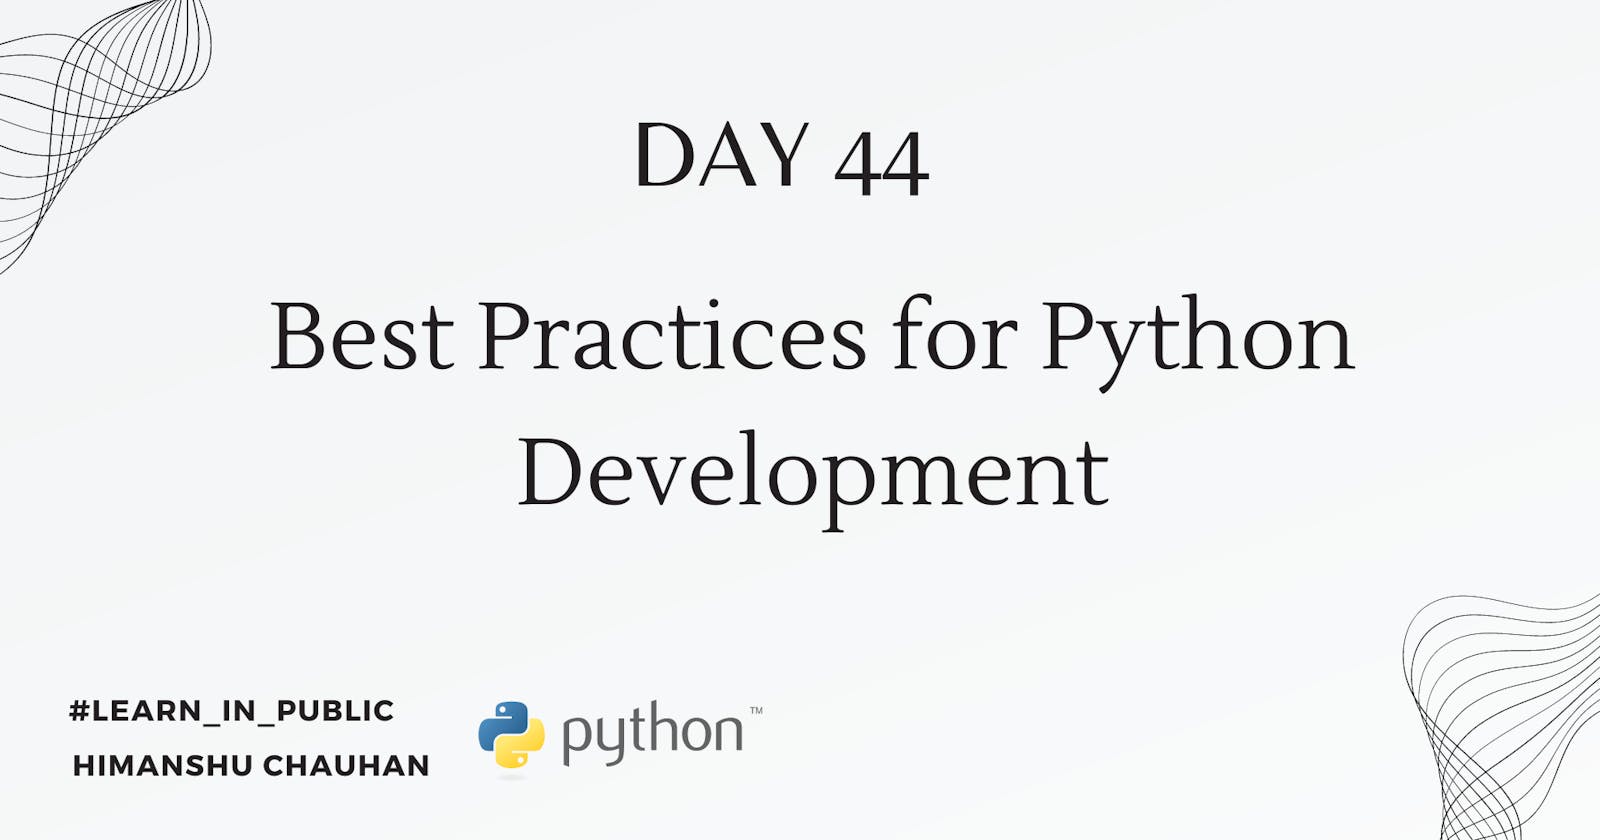 Day 44: Best Practices for Python Development